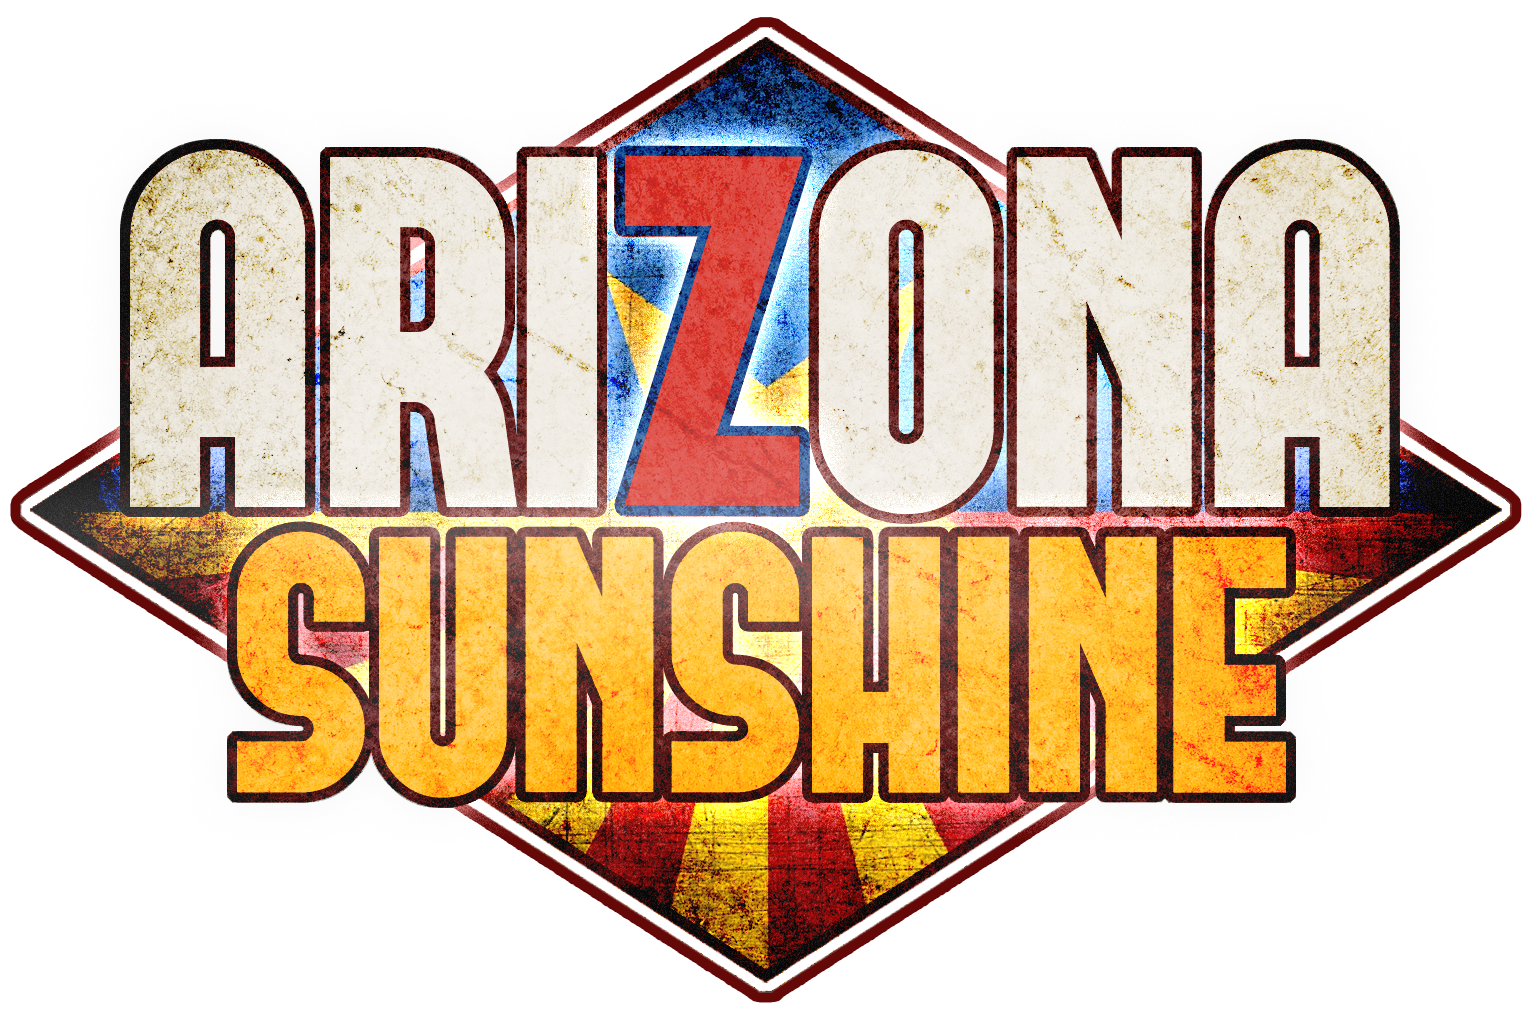 Arizona Sunshine logo